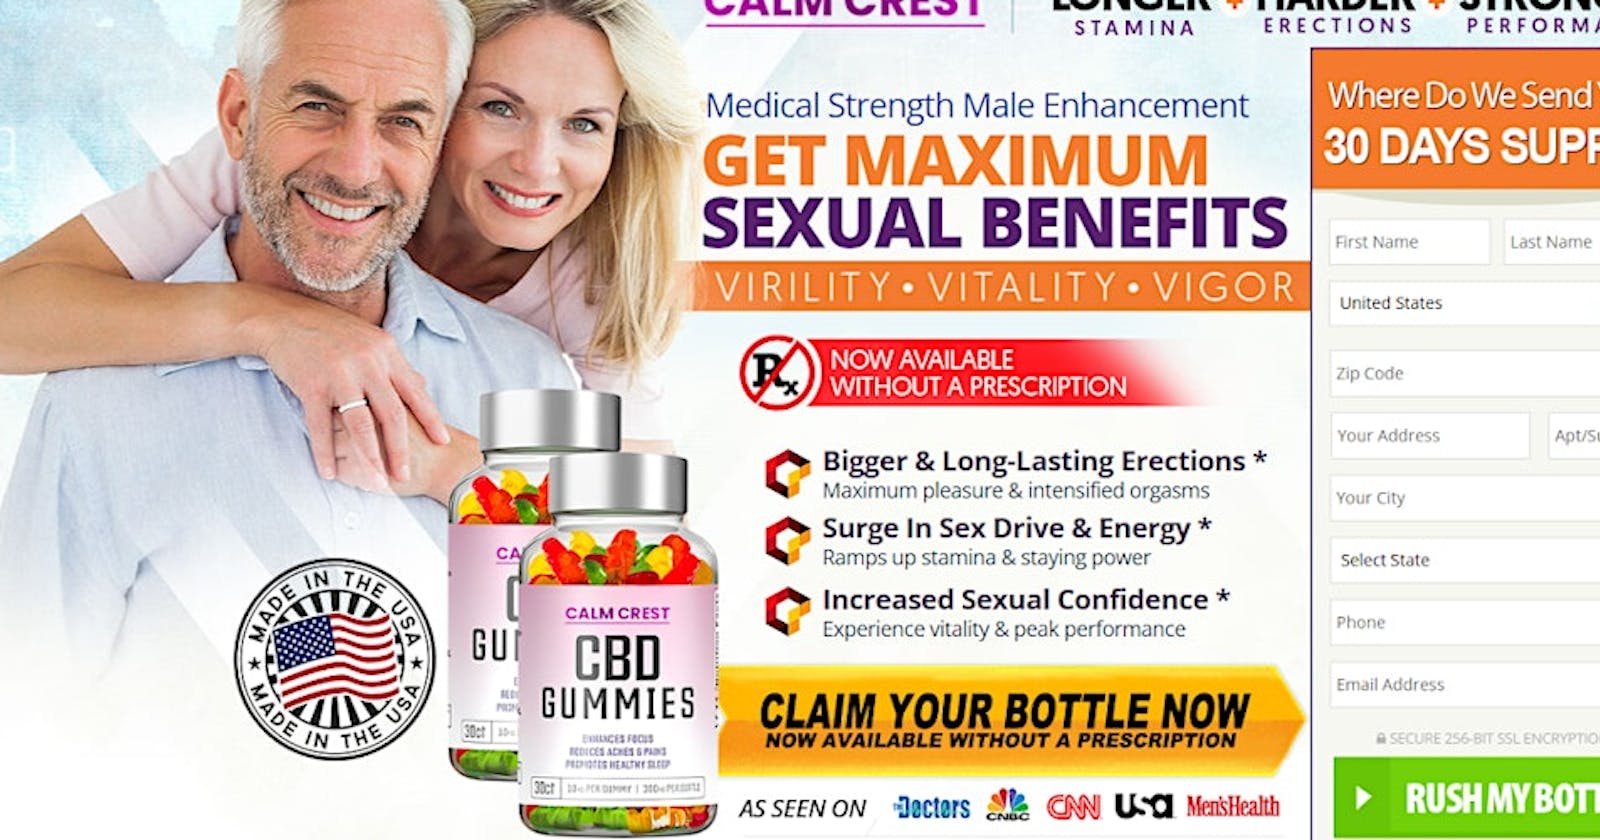 Calm Crest CBD Male Enhancement Gummies Reviews, Results, Where To Buy?